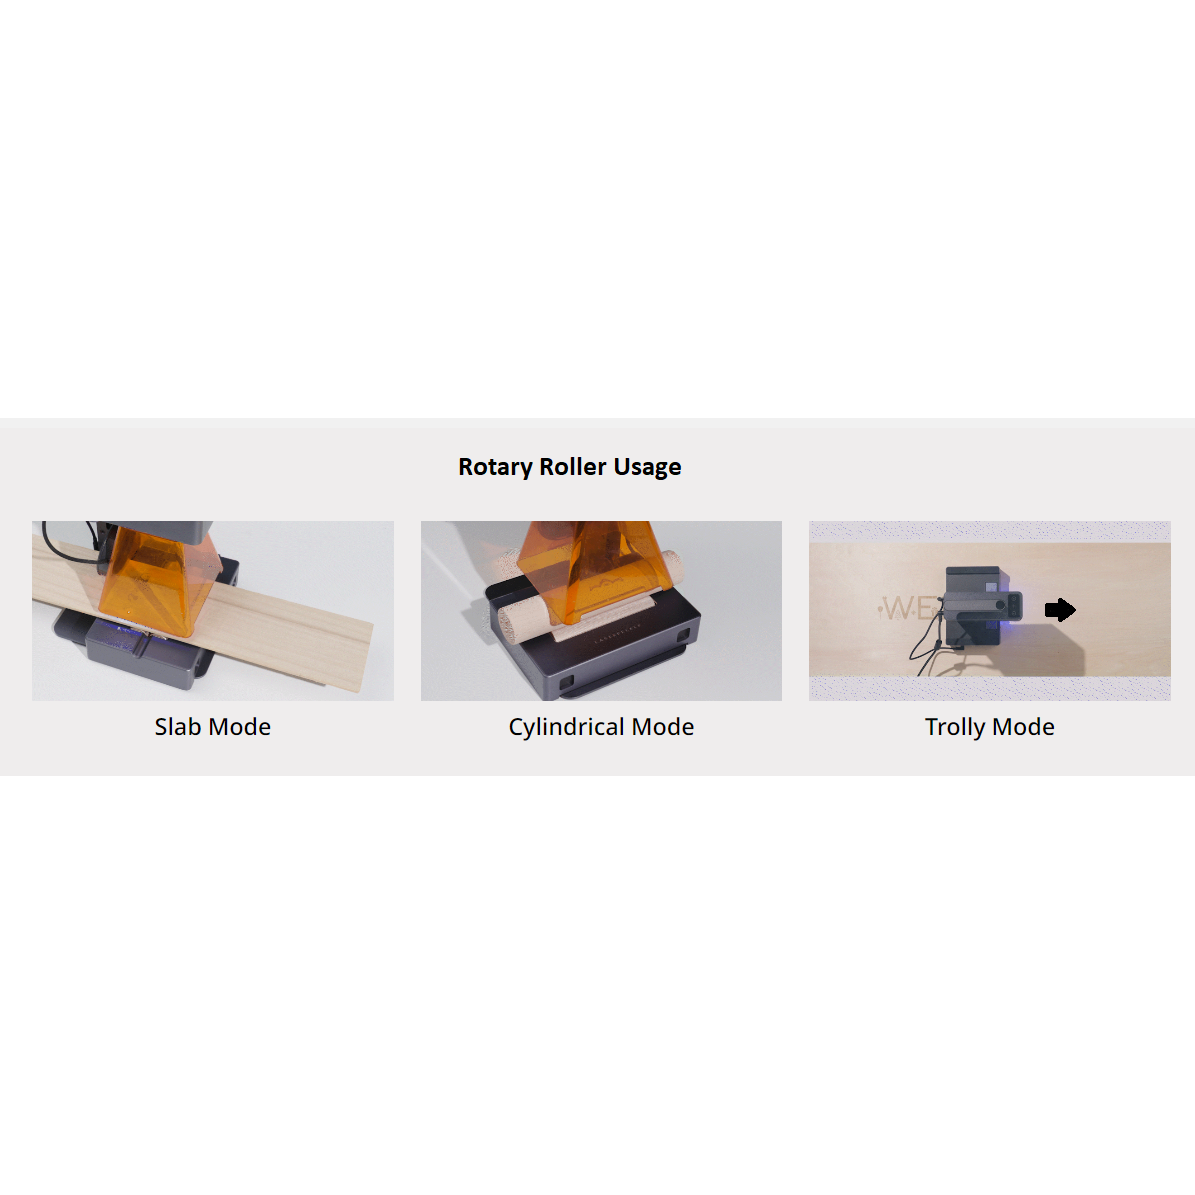 LaserPecker 2 Pro Laser Cutter/Engraver Bundle